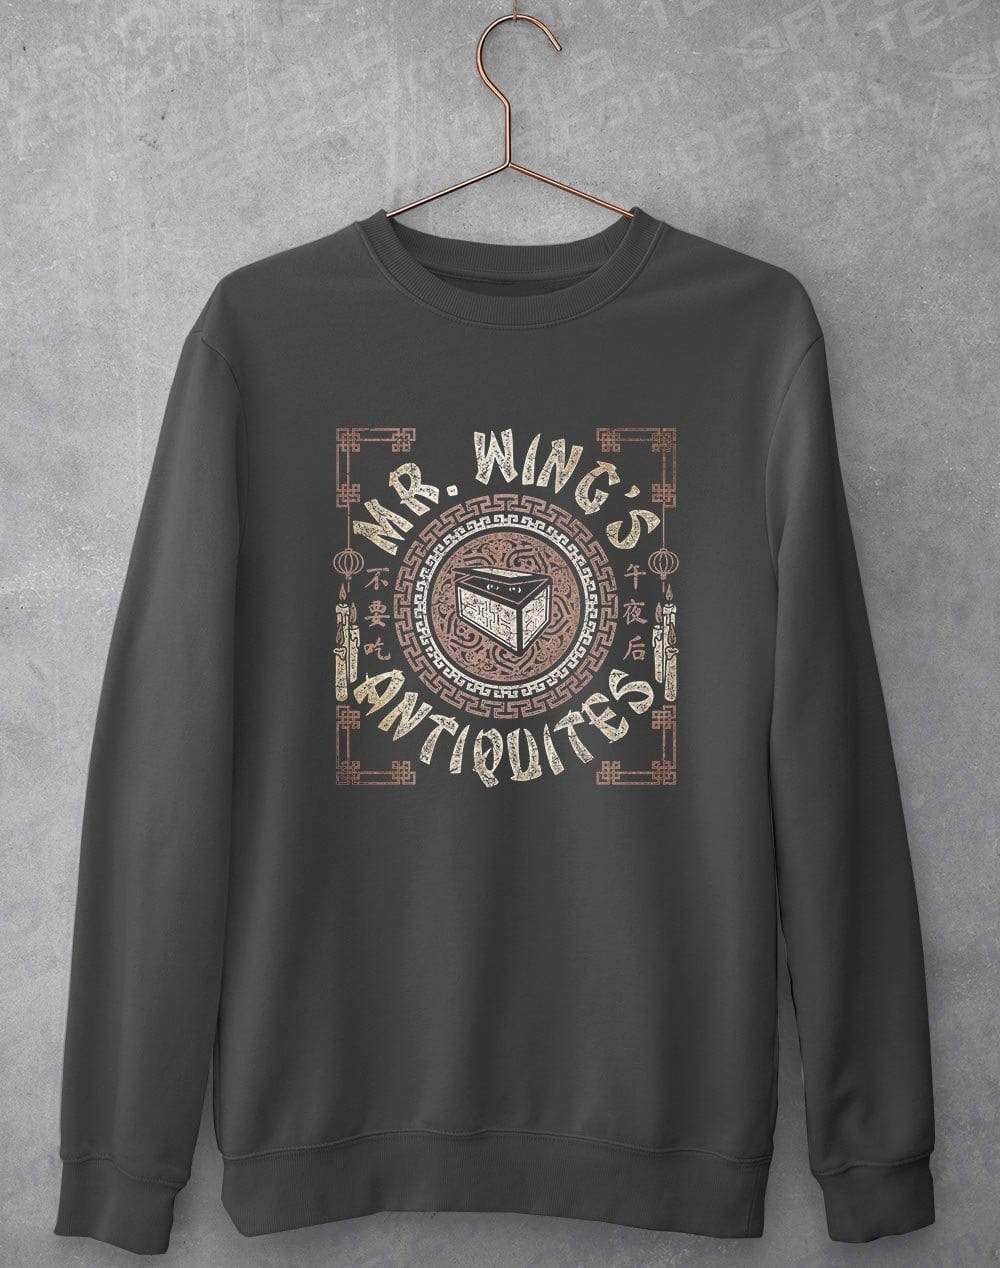 Mr Wings Antiquites Sweatshirt S / Charcoal  - Off World Tees